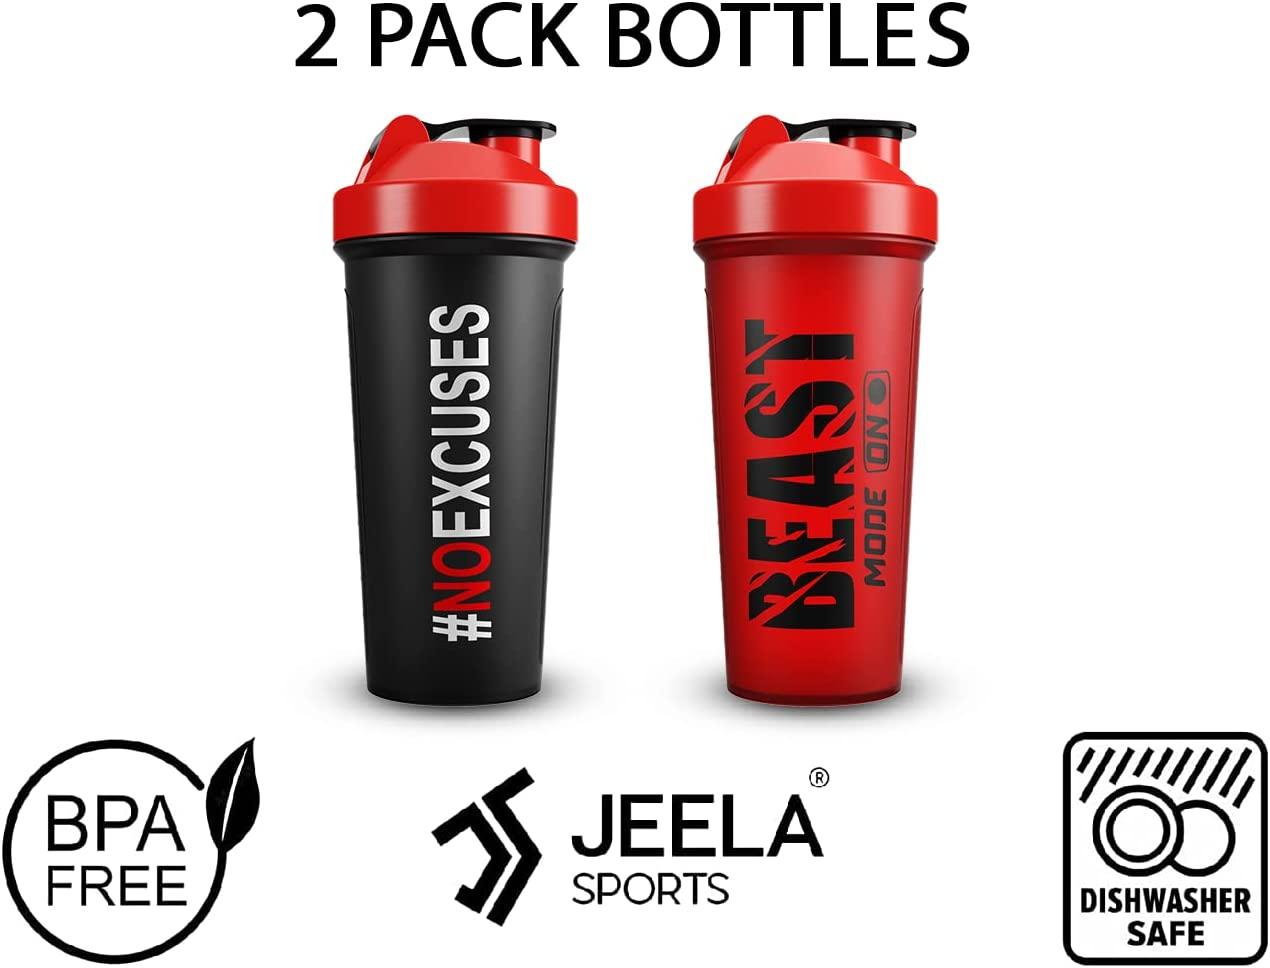  JEELA SPORTS 5 PACK Protein Shaker Bottles for Protein